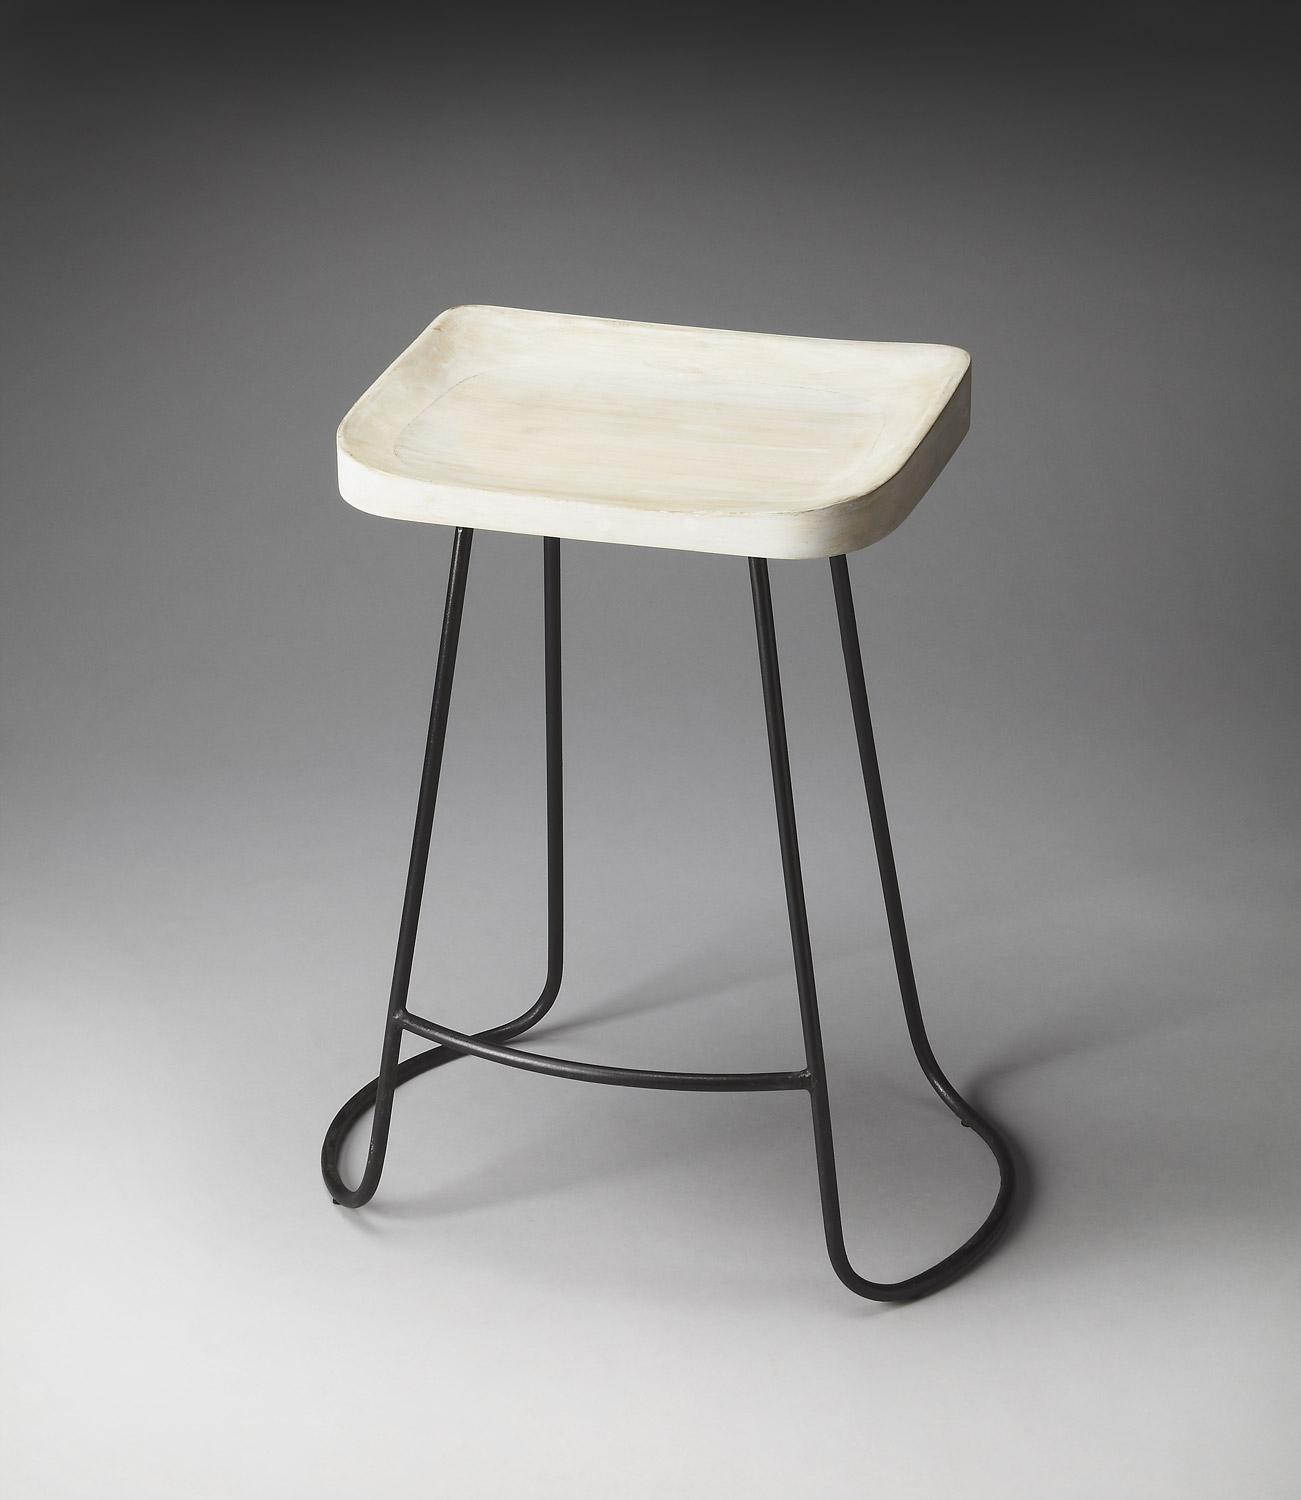 Butler artifacts alton backless bar stool